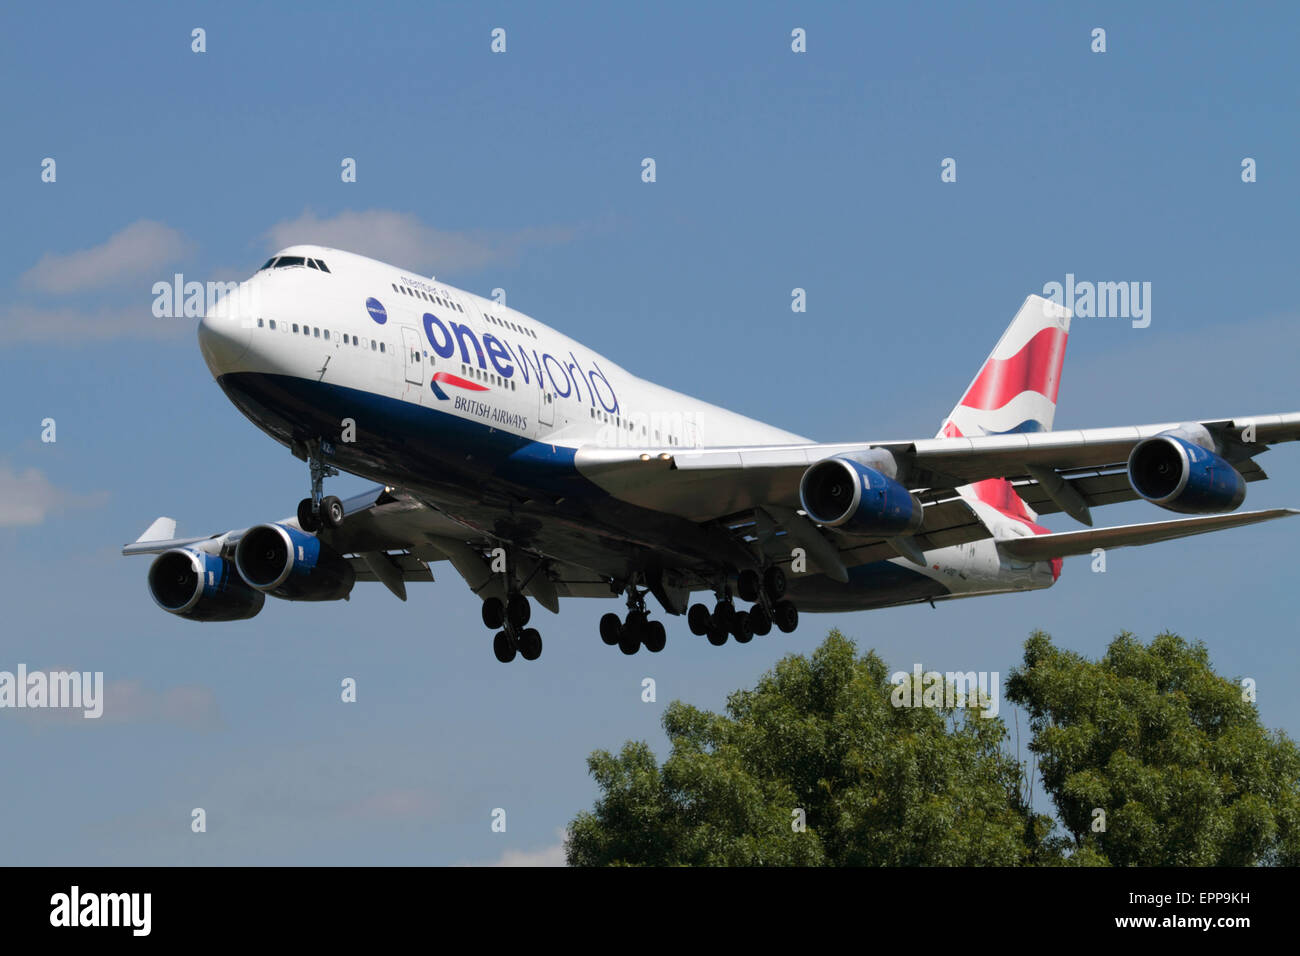 British Airways Boeing 747-400 jumbo jet plane bearing the oneworld airline alliance logo on approach to London Heathrow. International air travel. Stock Photo